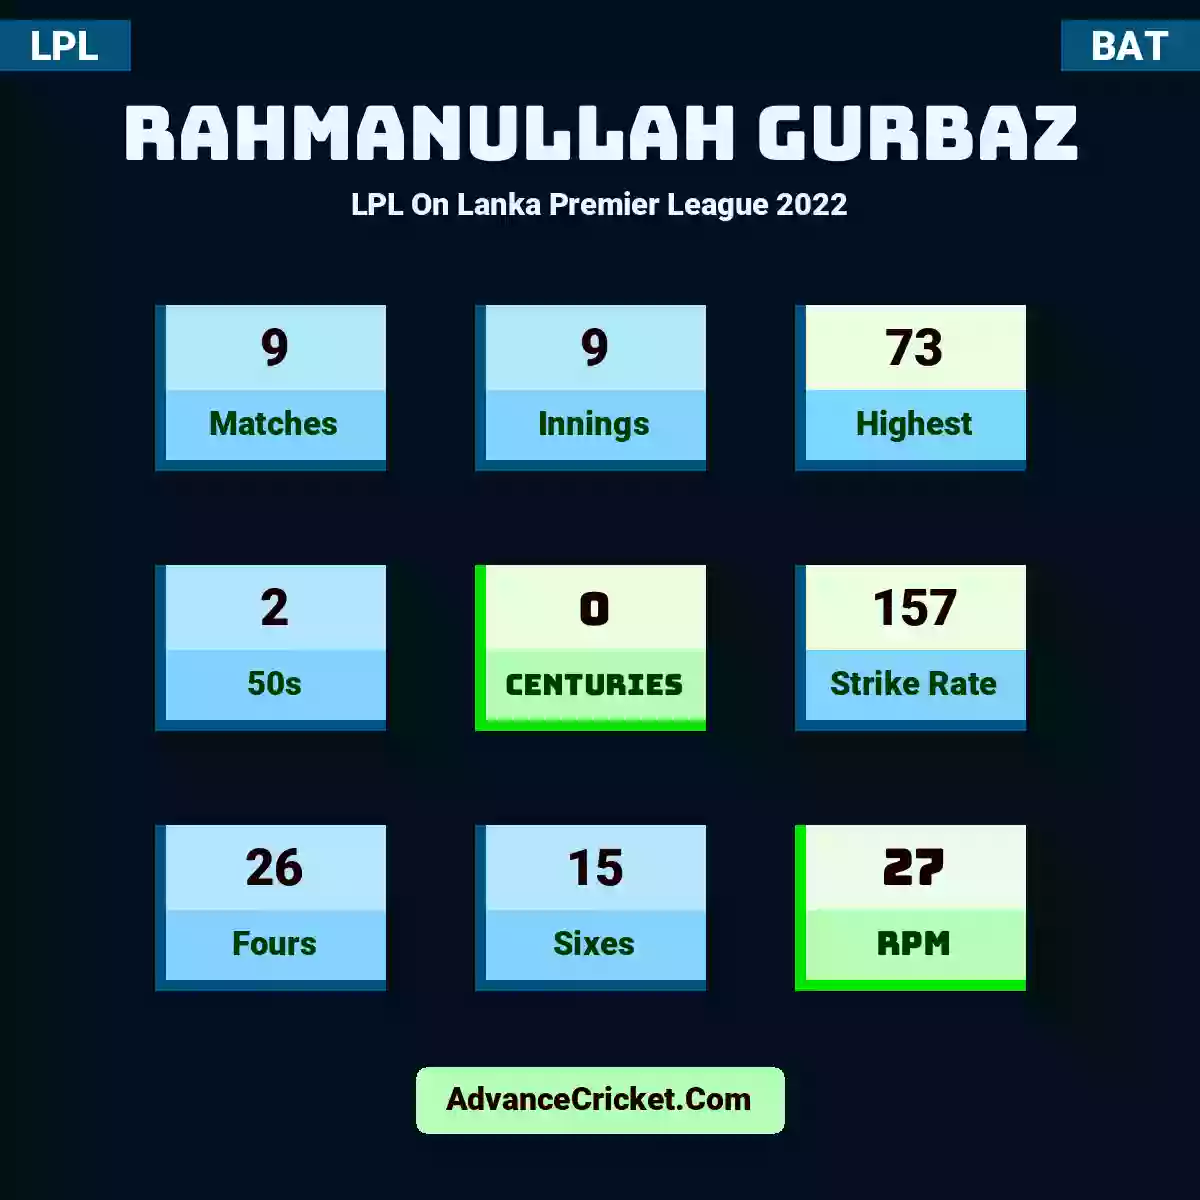 Rahmanullah Gurbaz LPL  On Lanka Premier League 2022, Rahmanullah Gurbaz played 9 matches, scored 73 runs as highest, 2 half-centuries, and 0 centuries, with a strike rate of 157. R.Gurbaz hit 26 fours and 15 sixes, with an RPM of 27.